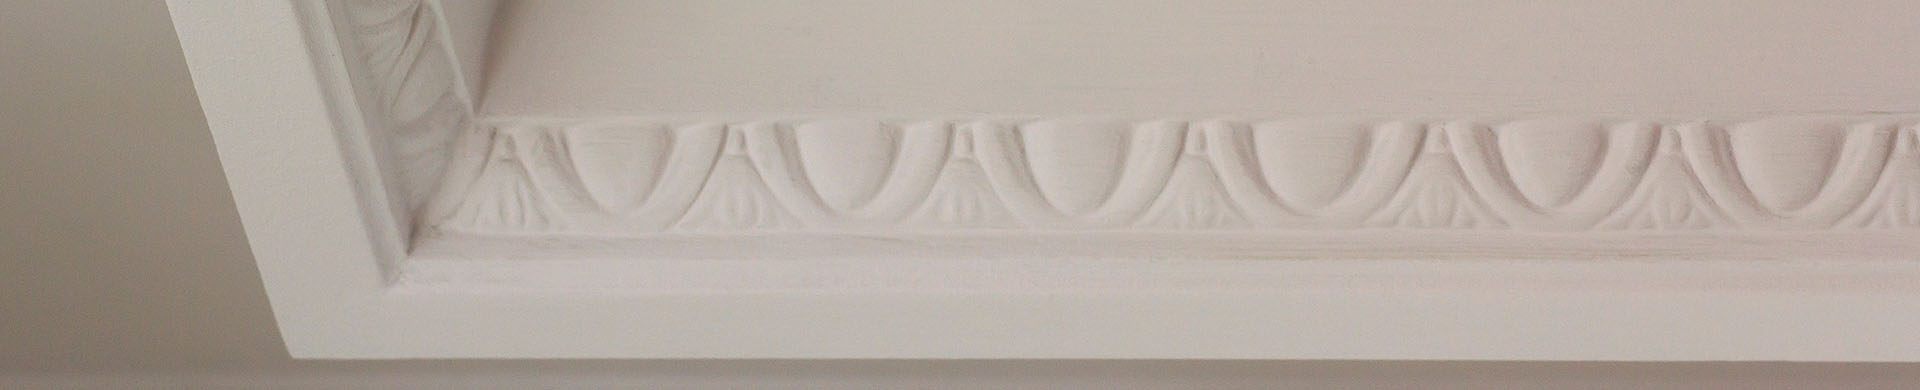 White Ornate Crown Molding